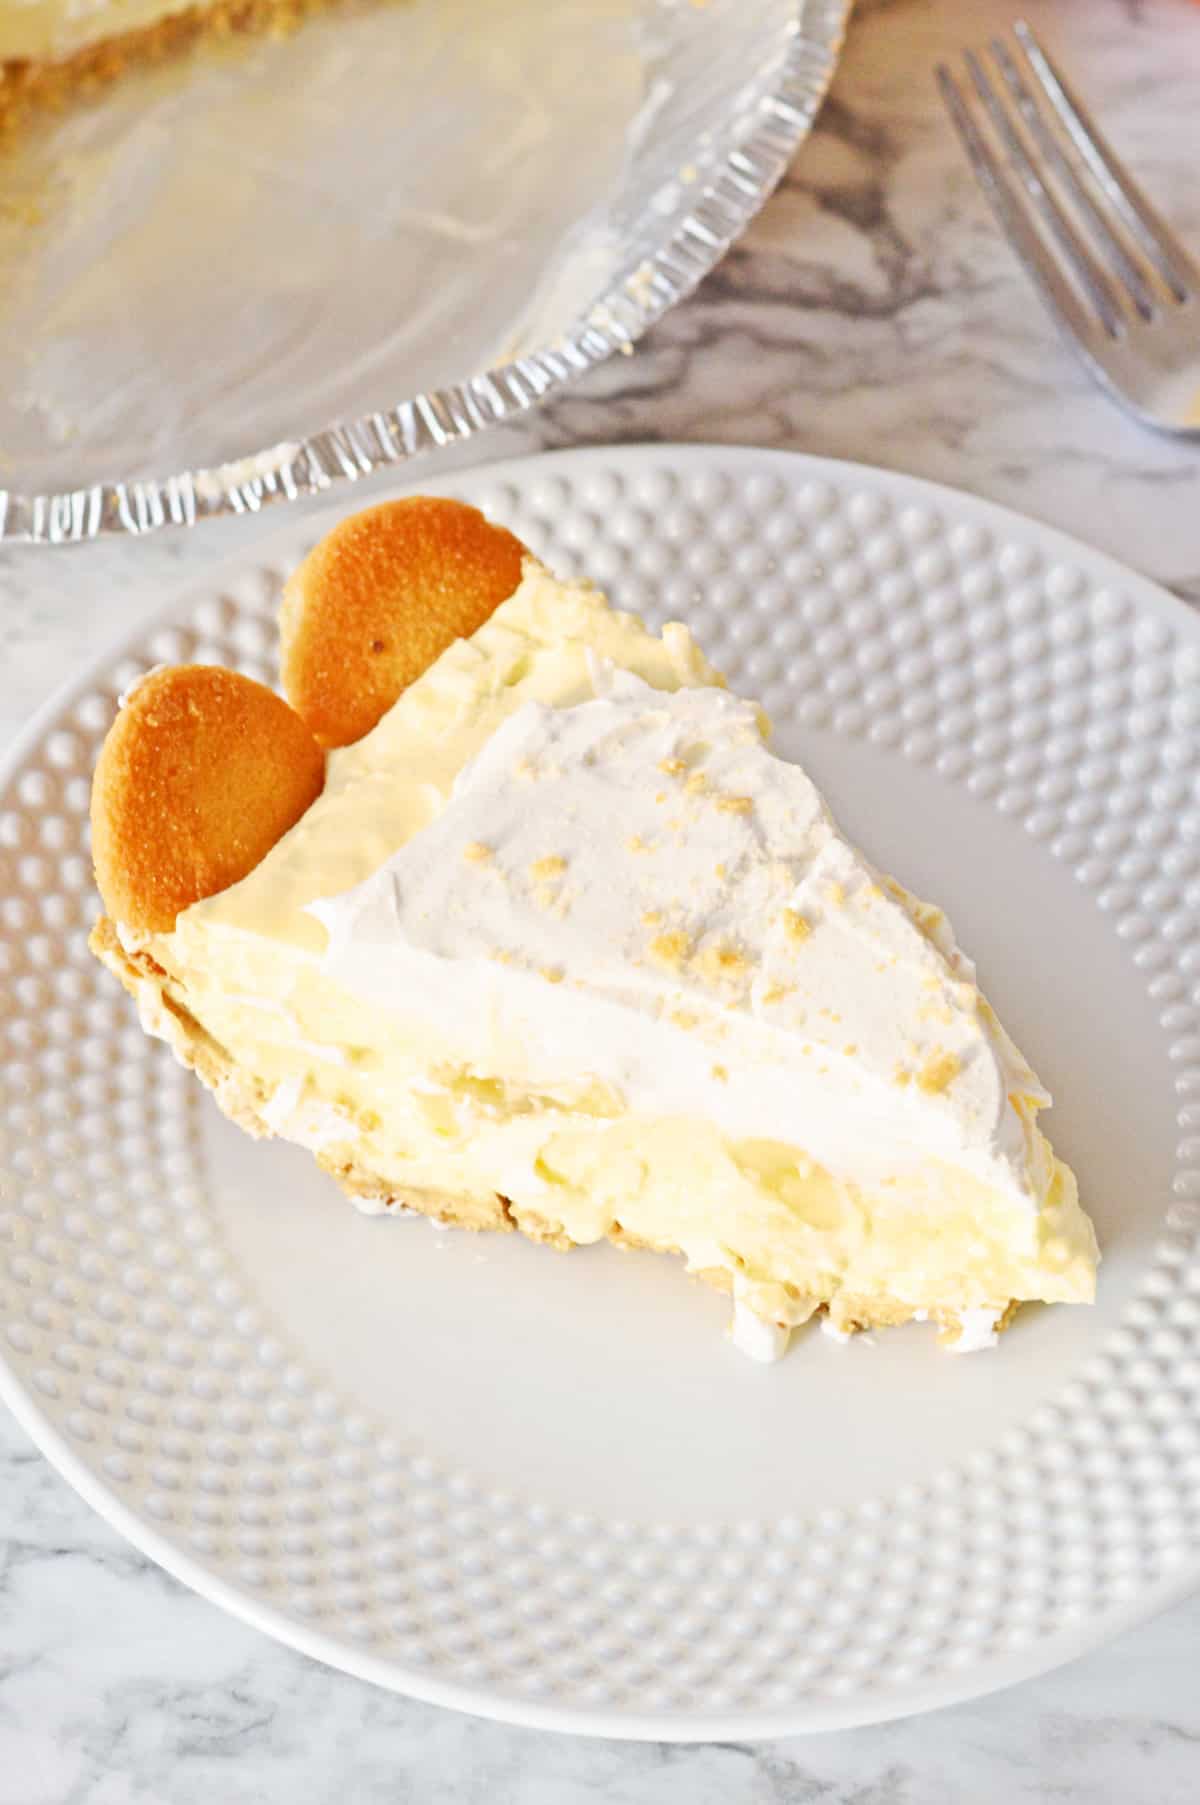 Slice of banana cream pudding pie on white plate.